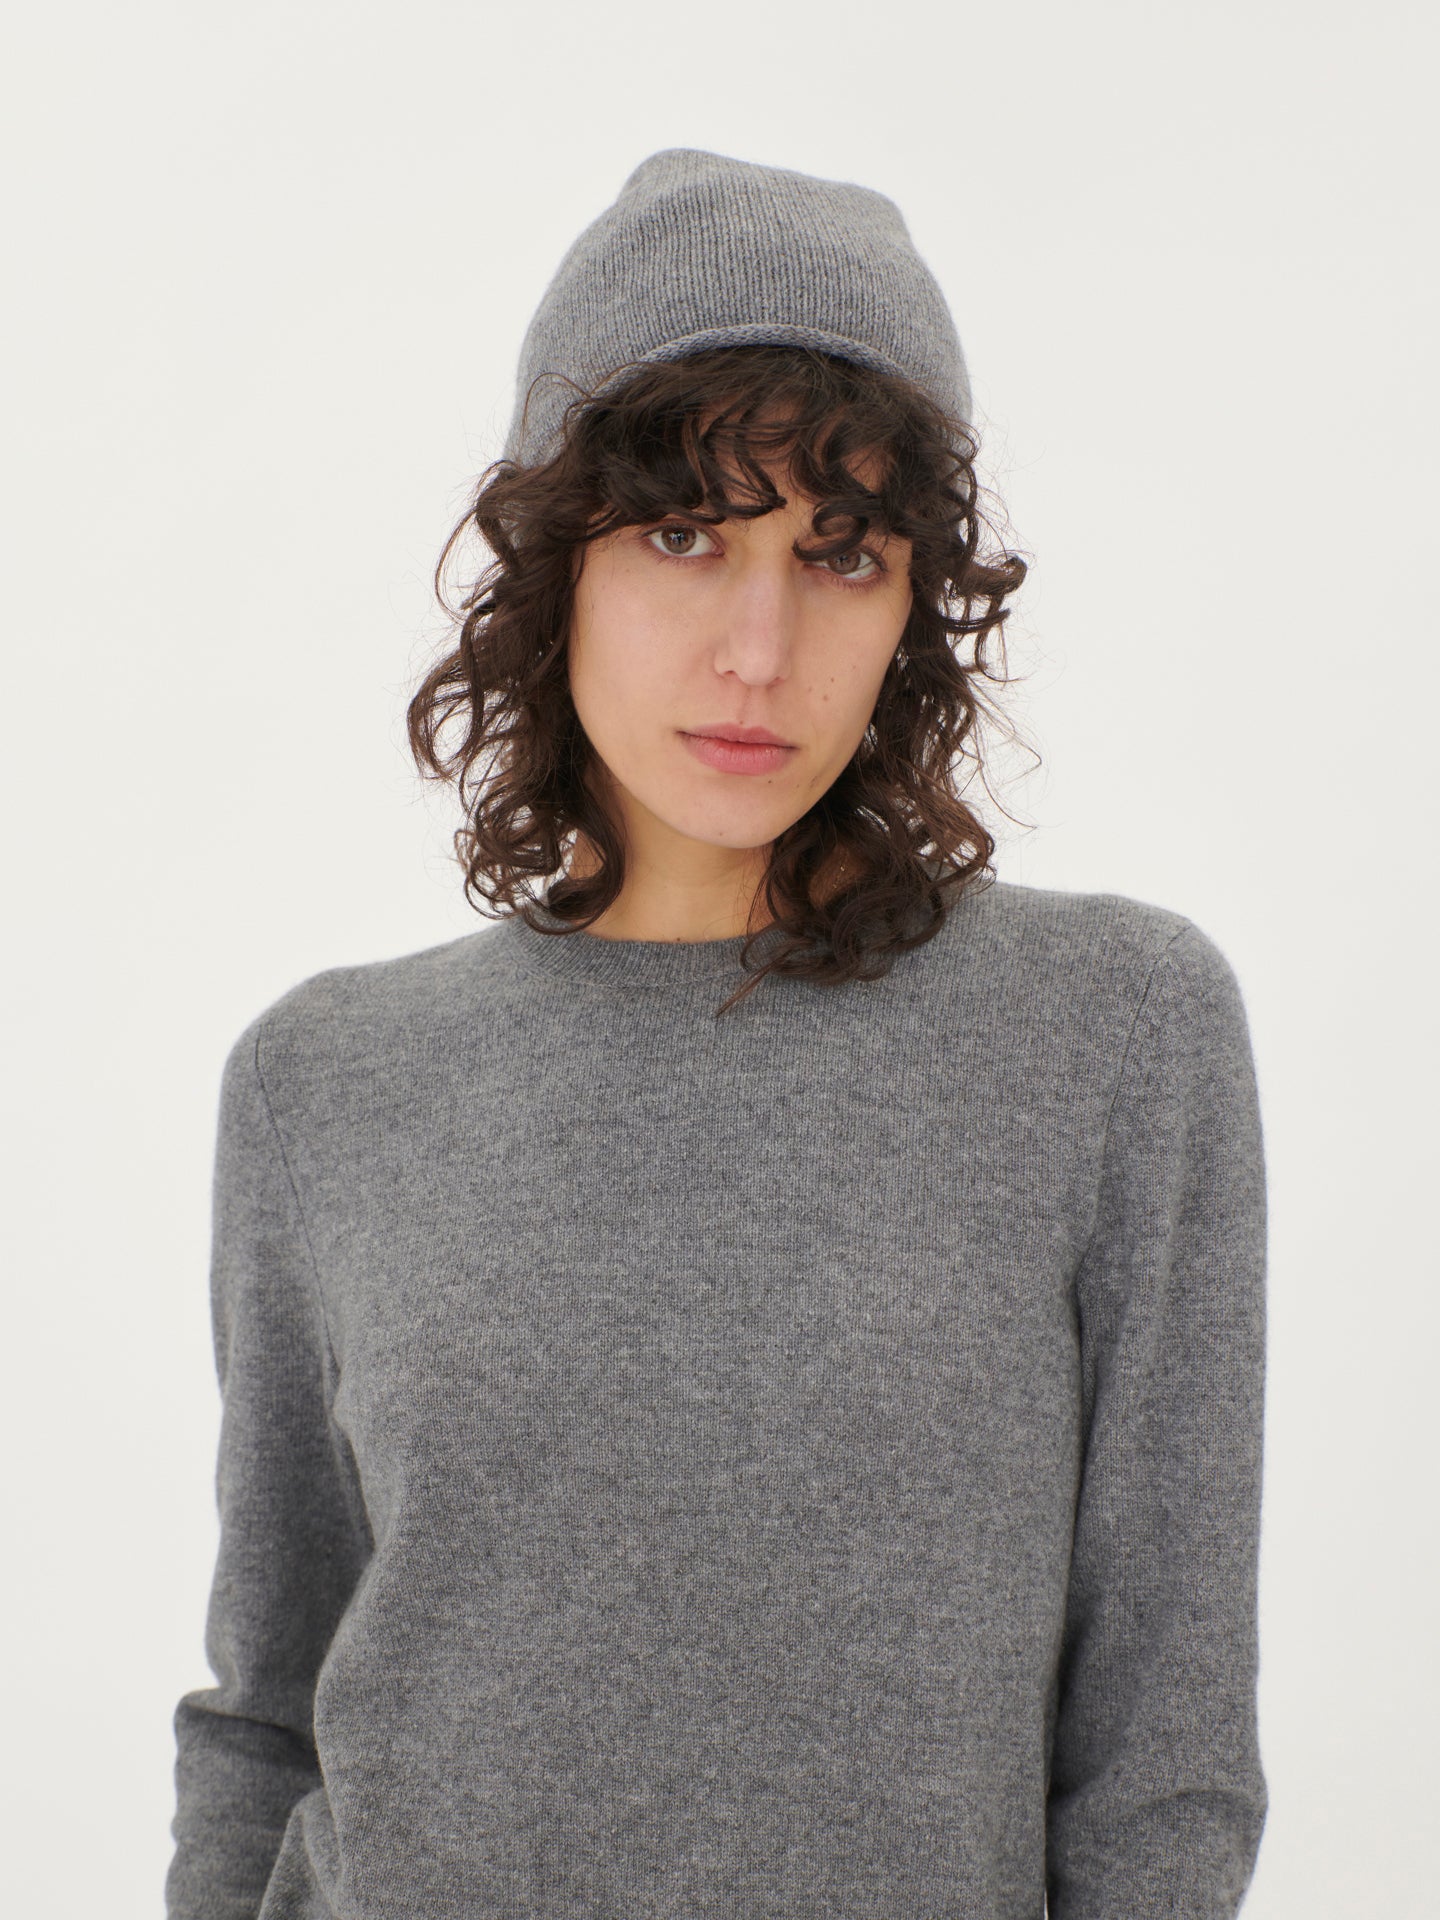 $99 Cashmere Hat & Sweater